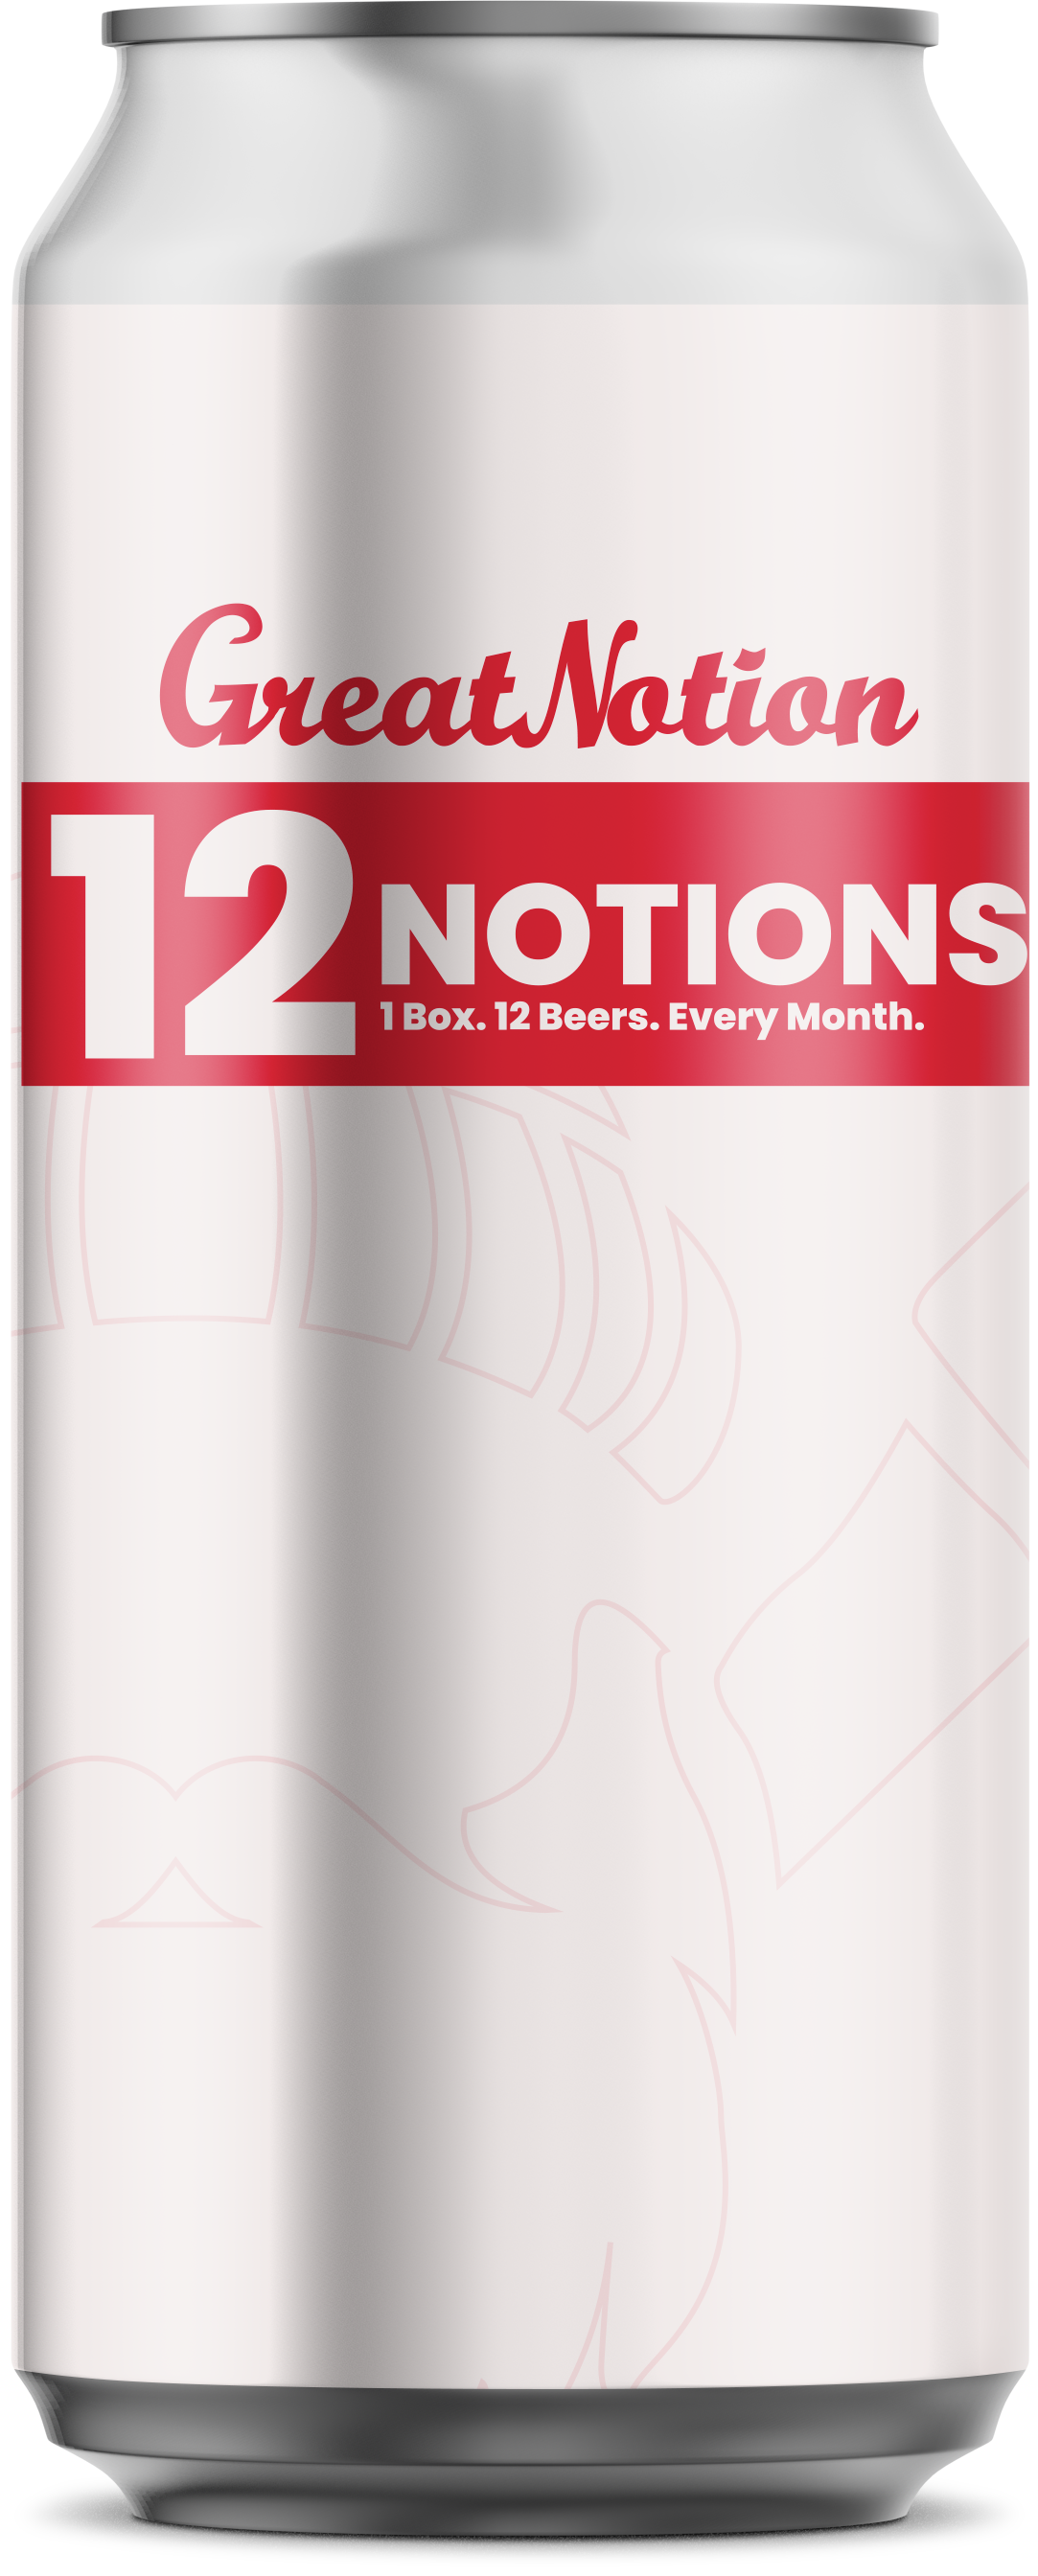 12 Notions - April